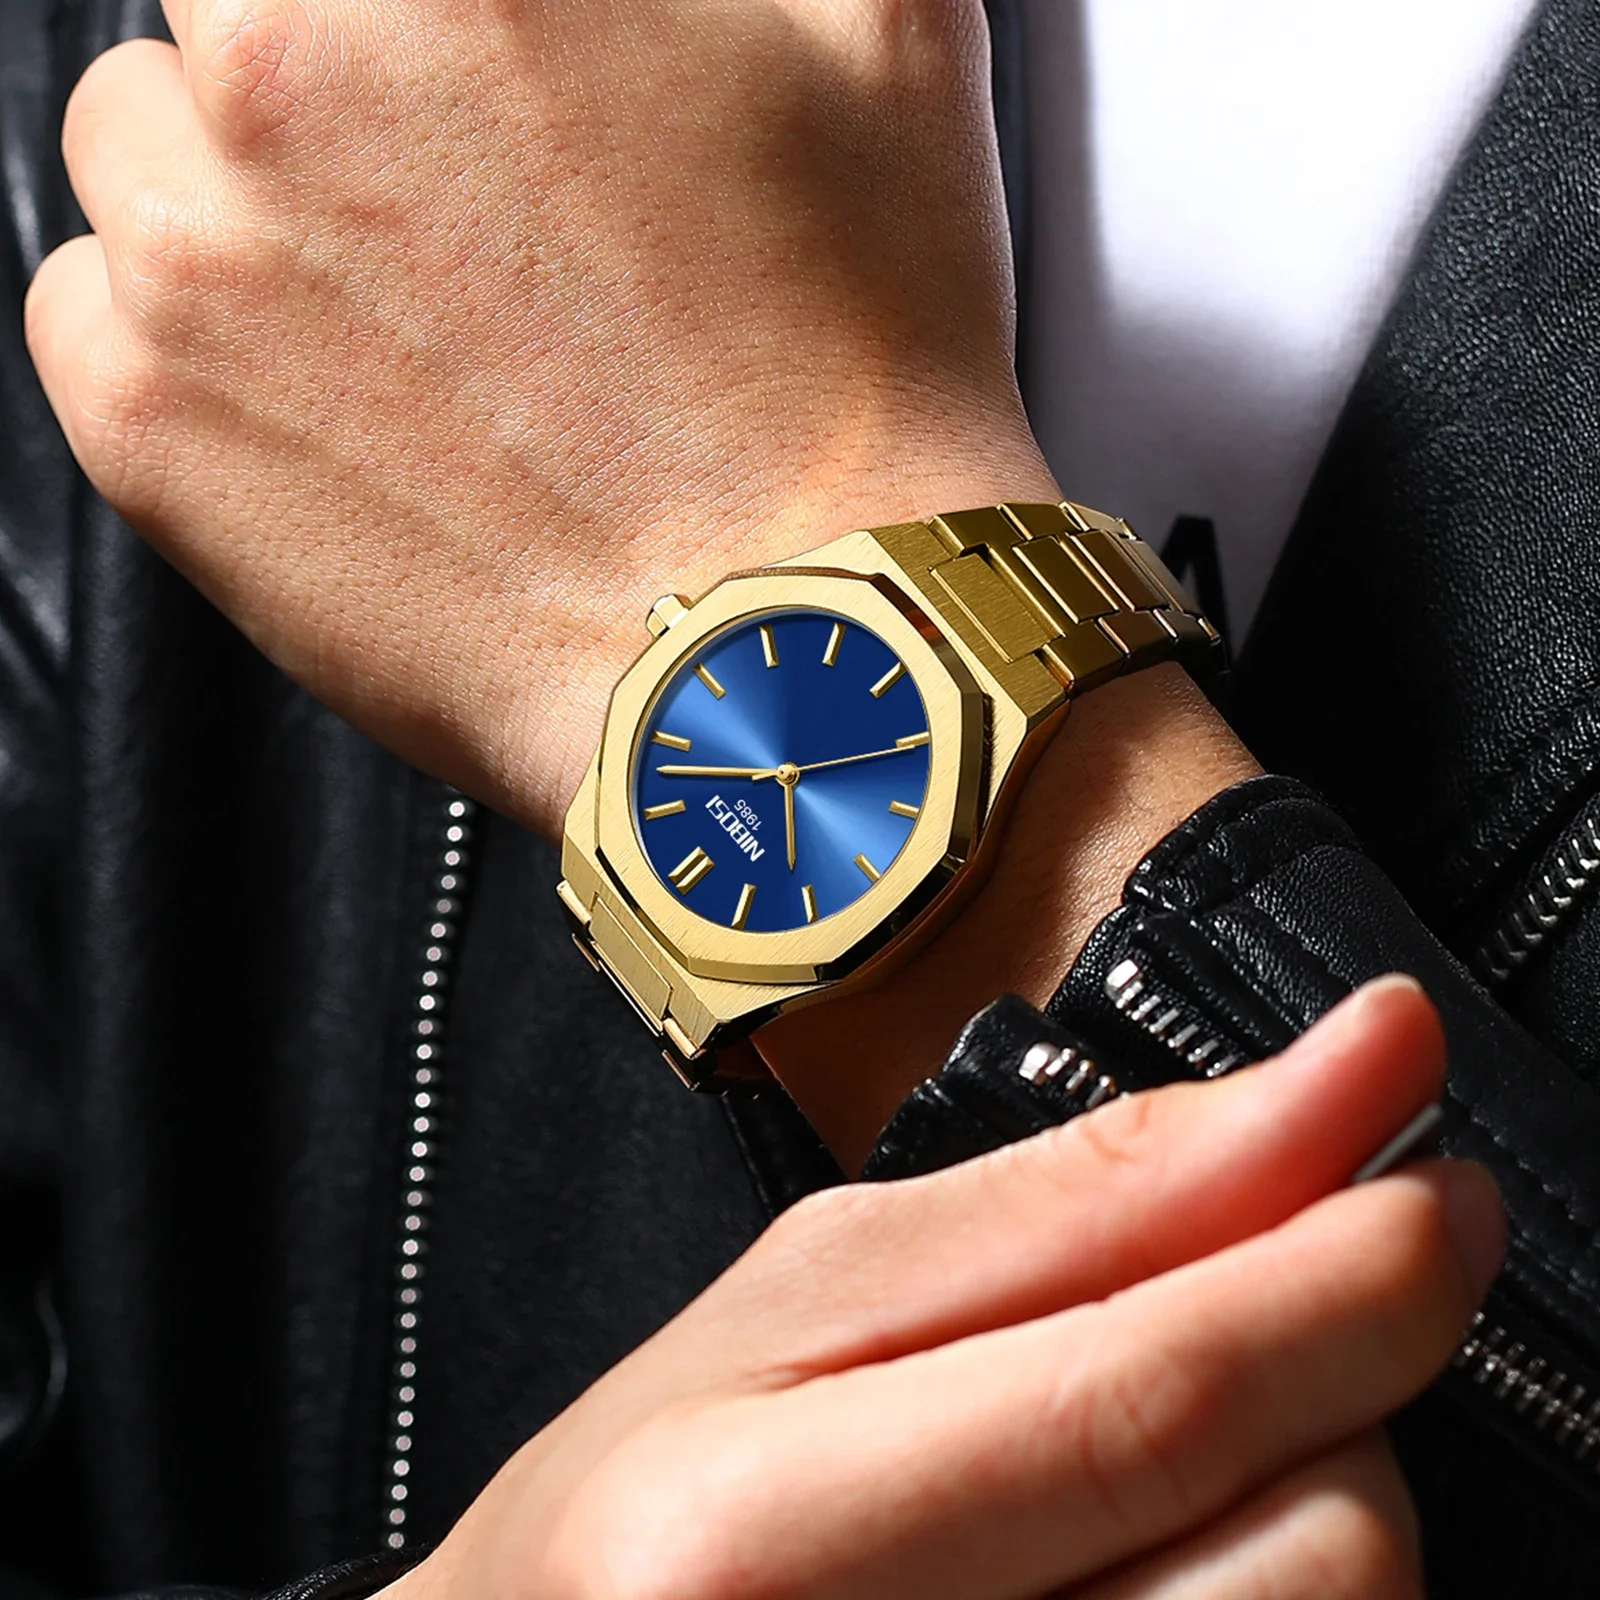 NIBOSI Top Brand Luxury Mens Watches Waterproof Simple Clock Male Sports Watch Men Quartz Casual Wrist Watch Relogio Masculino